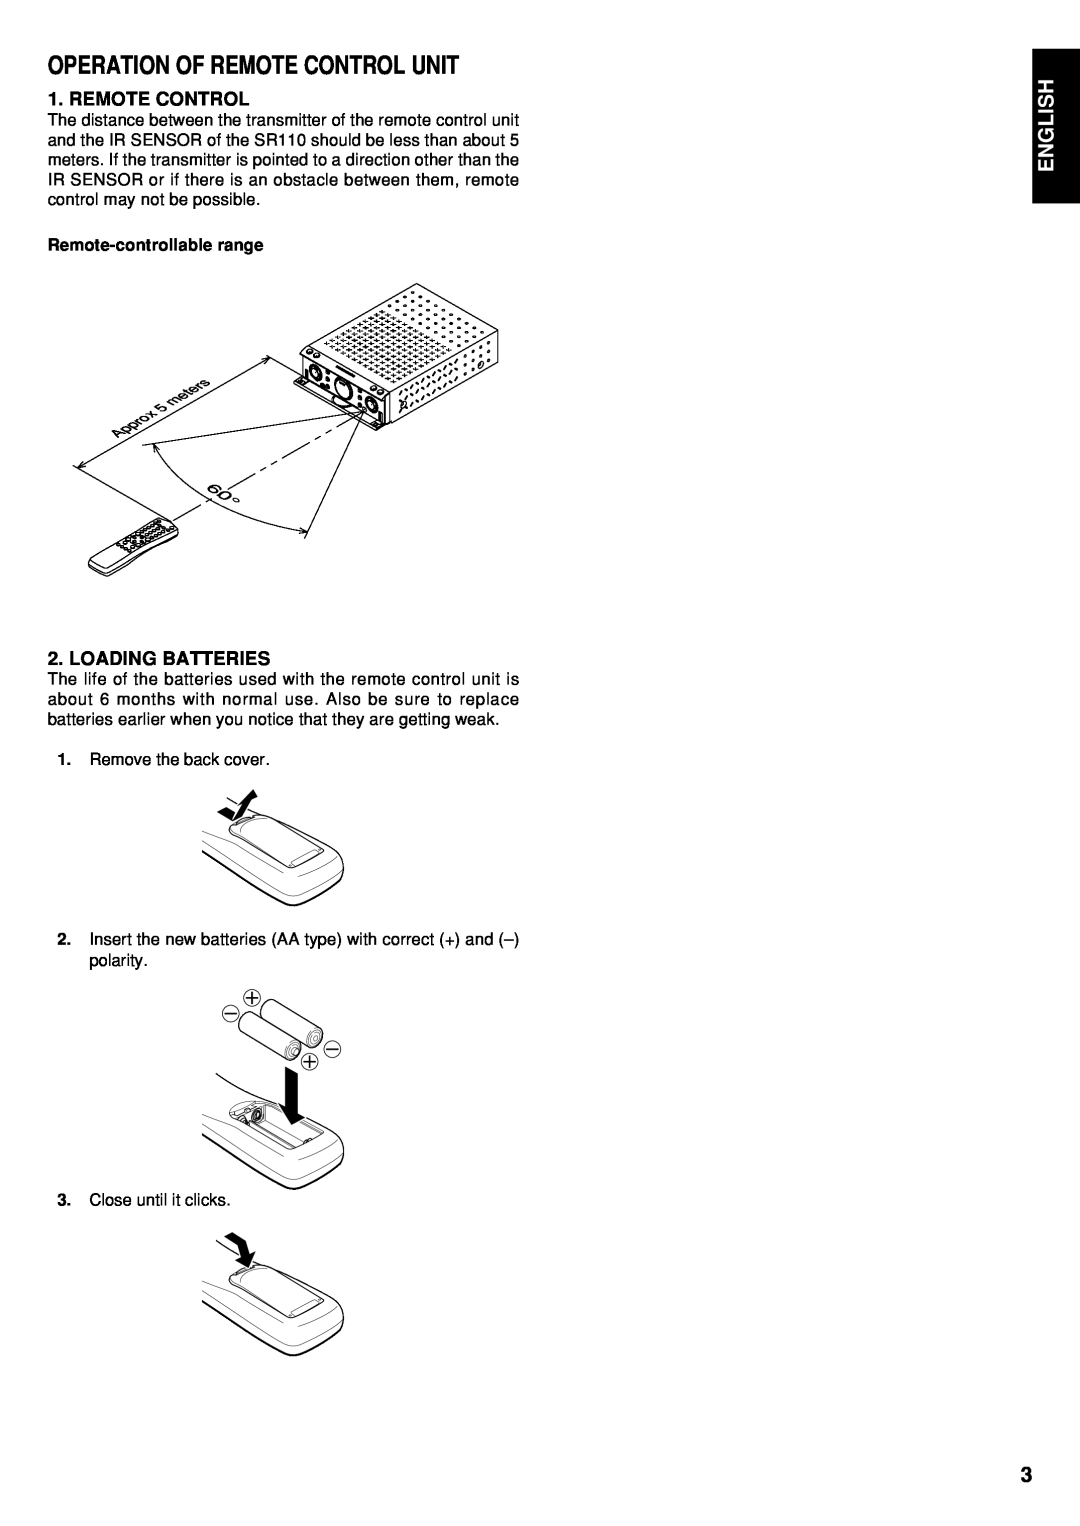 Marantz CD110 manual English, Remote Control, Loading Batteries, Remote-controllablerange, Remove the back cover 